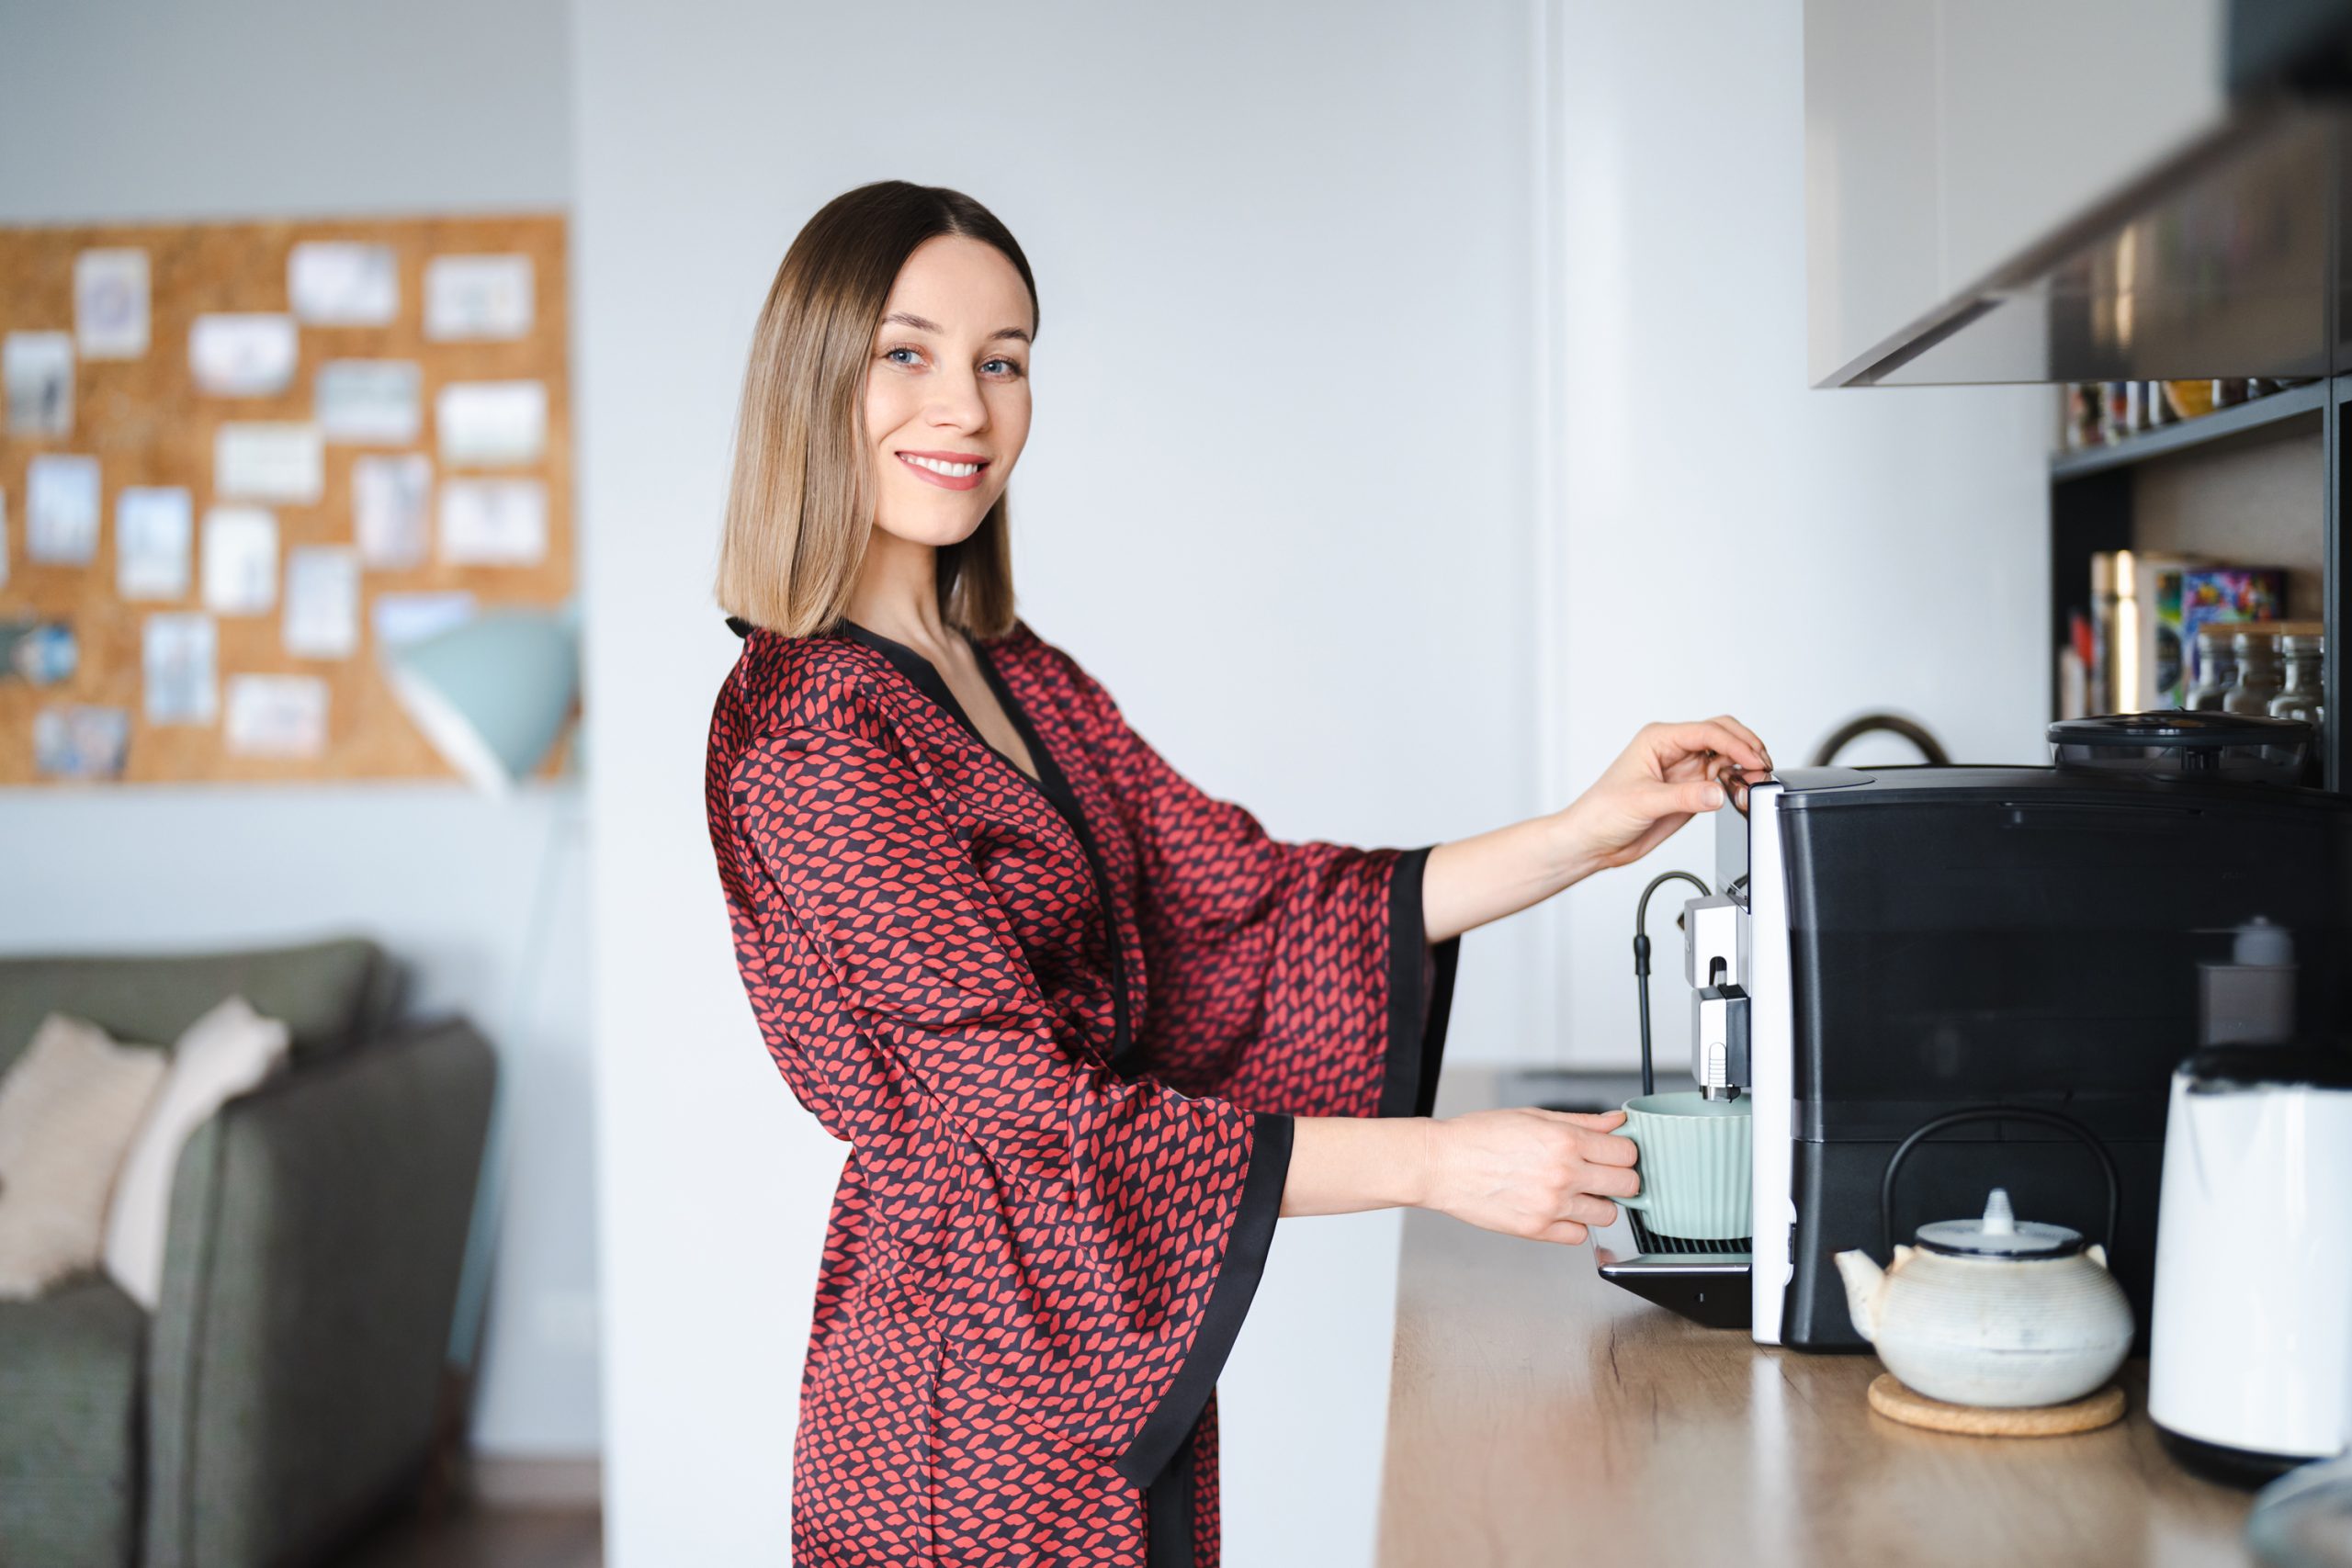 worker using office kitchen appliances